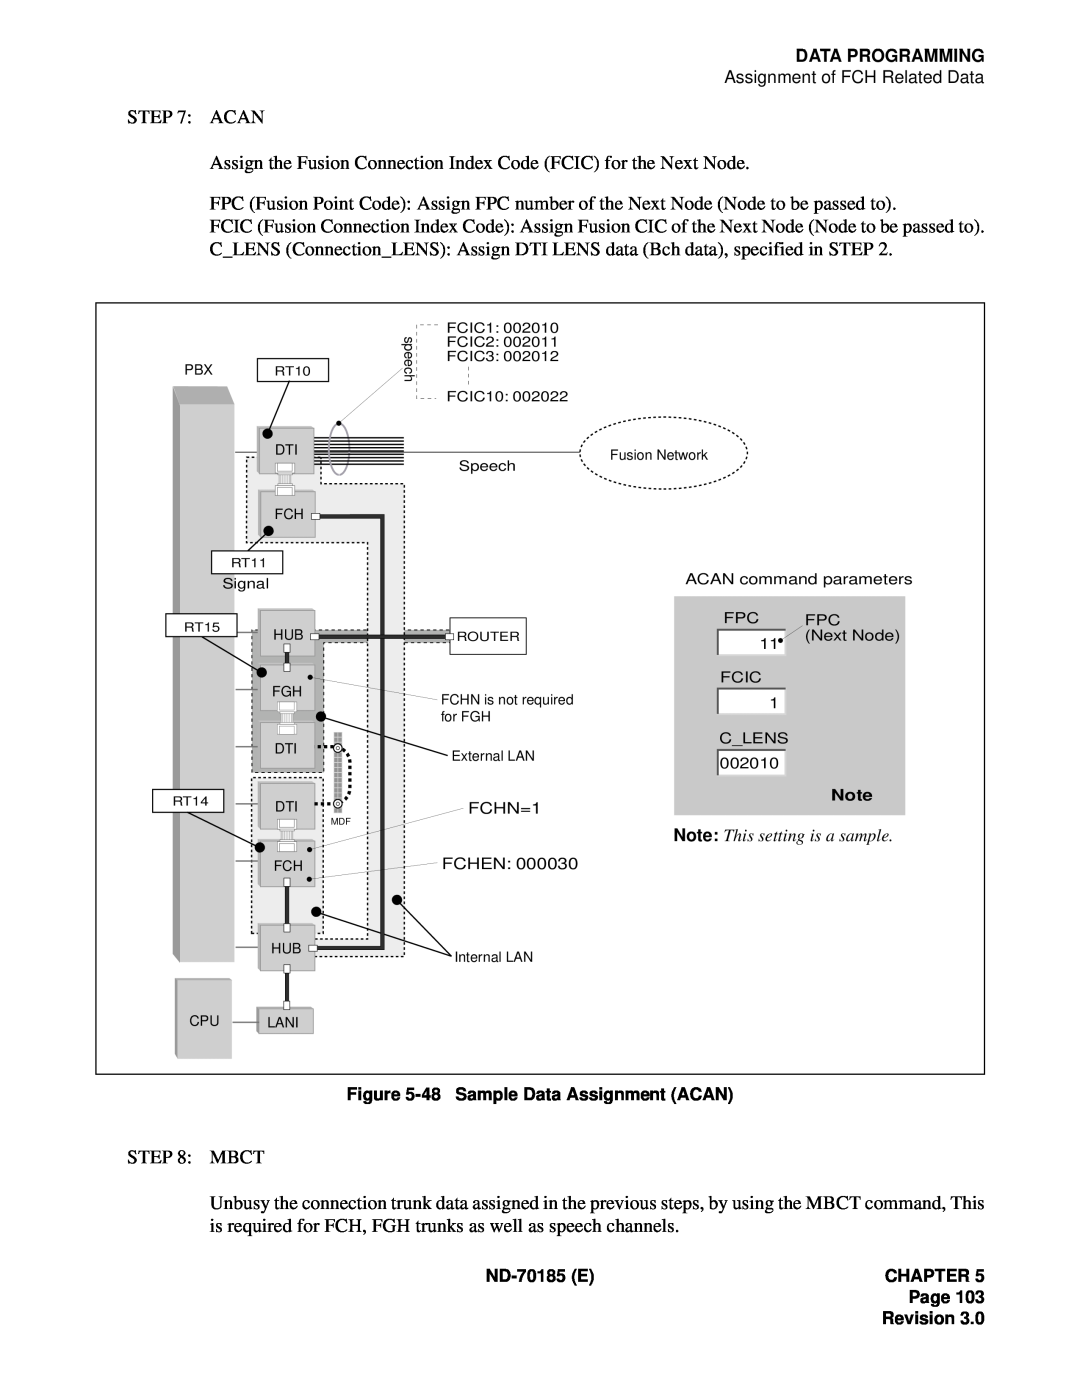 NEC NEAX2400 system manual Acan 